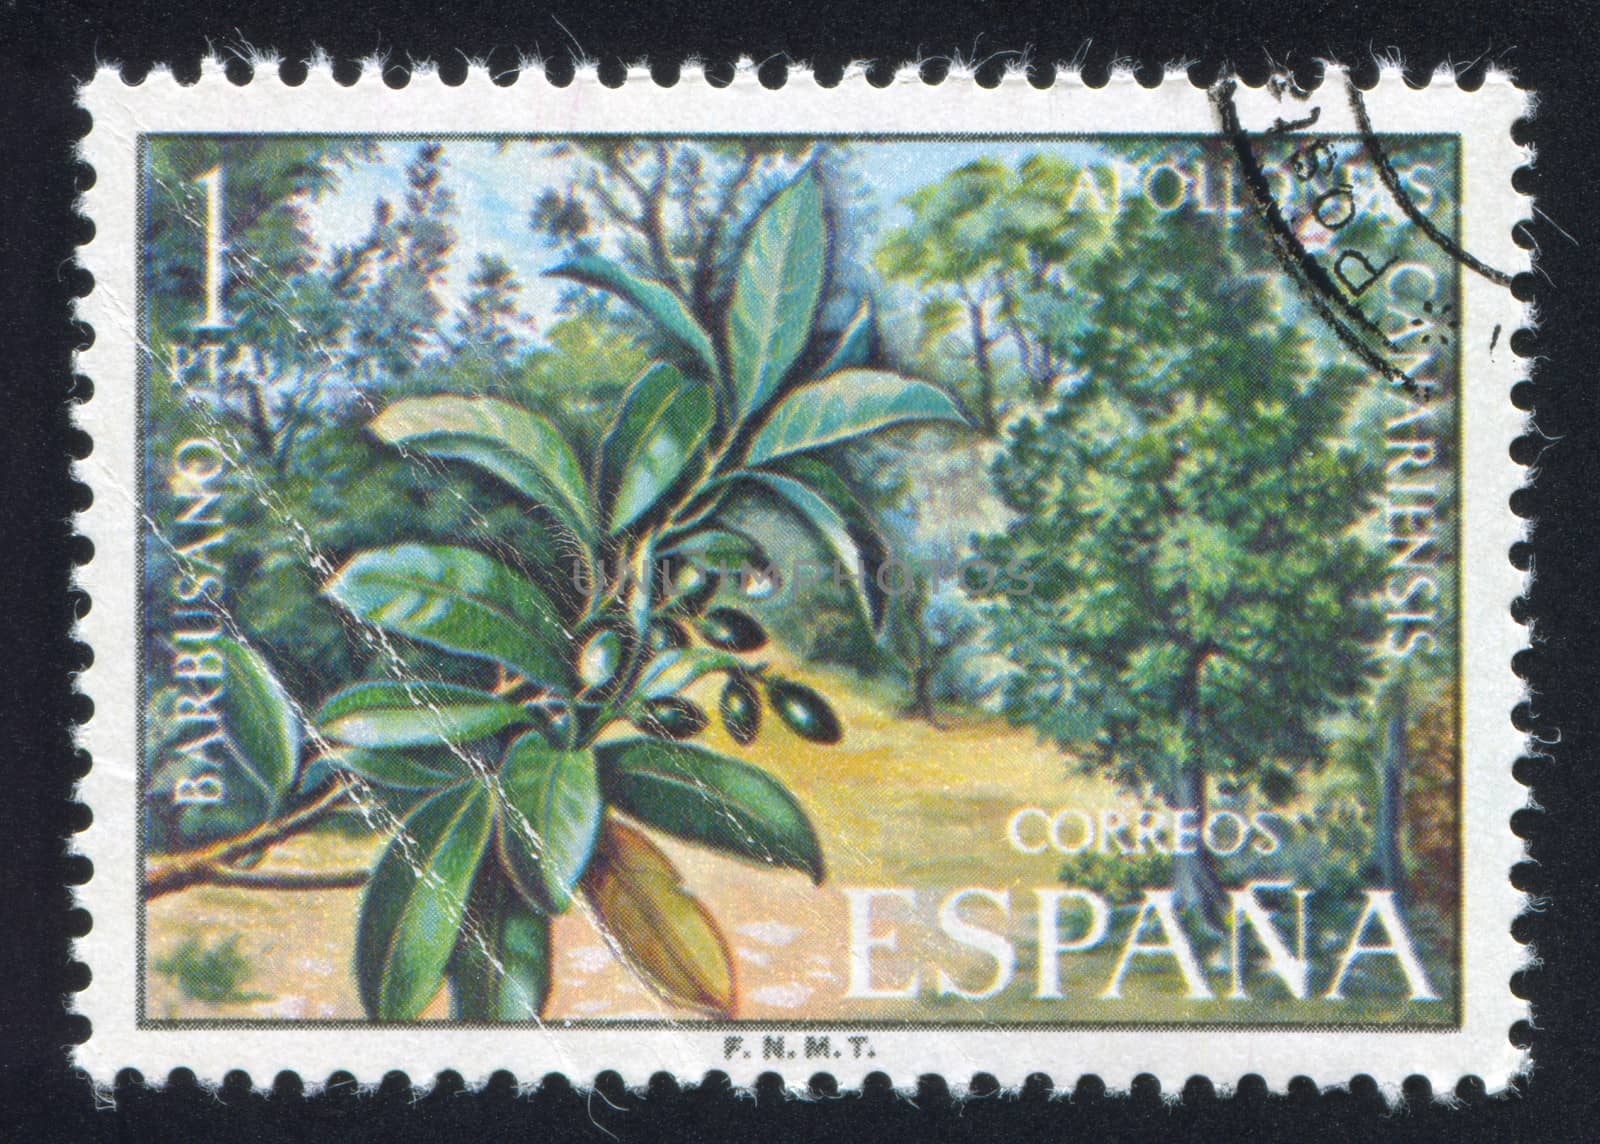 SPAIN - CIRCA 1976: stamp printed by Spain, shows Barbusano, circa 1976